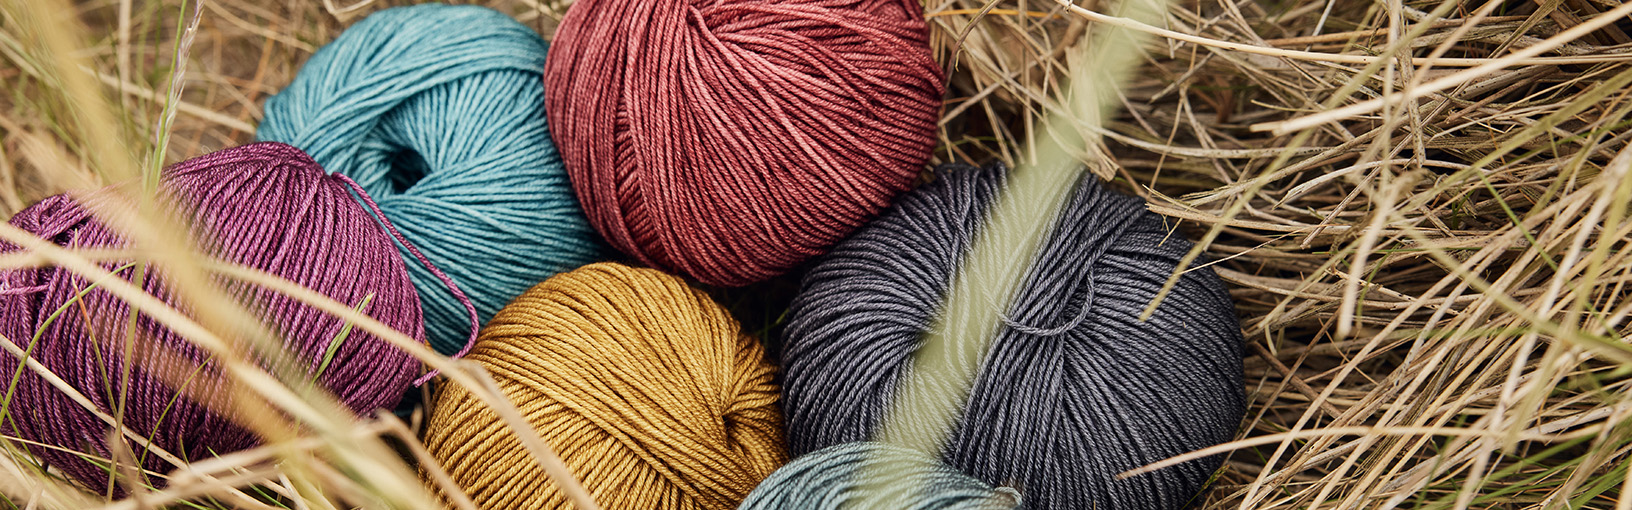 Visokokvalitetne pređe za pletenje, kukičanje i filc Lana Grossa Vune | Veganske pređe